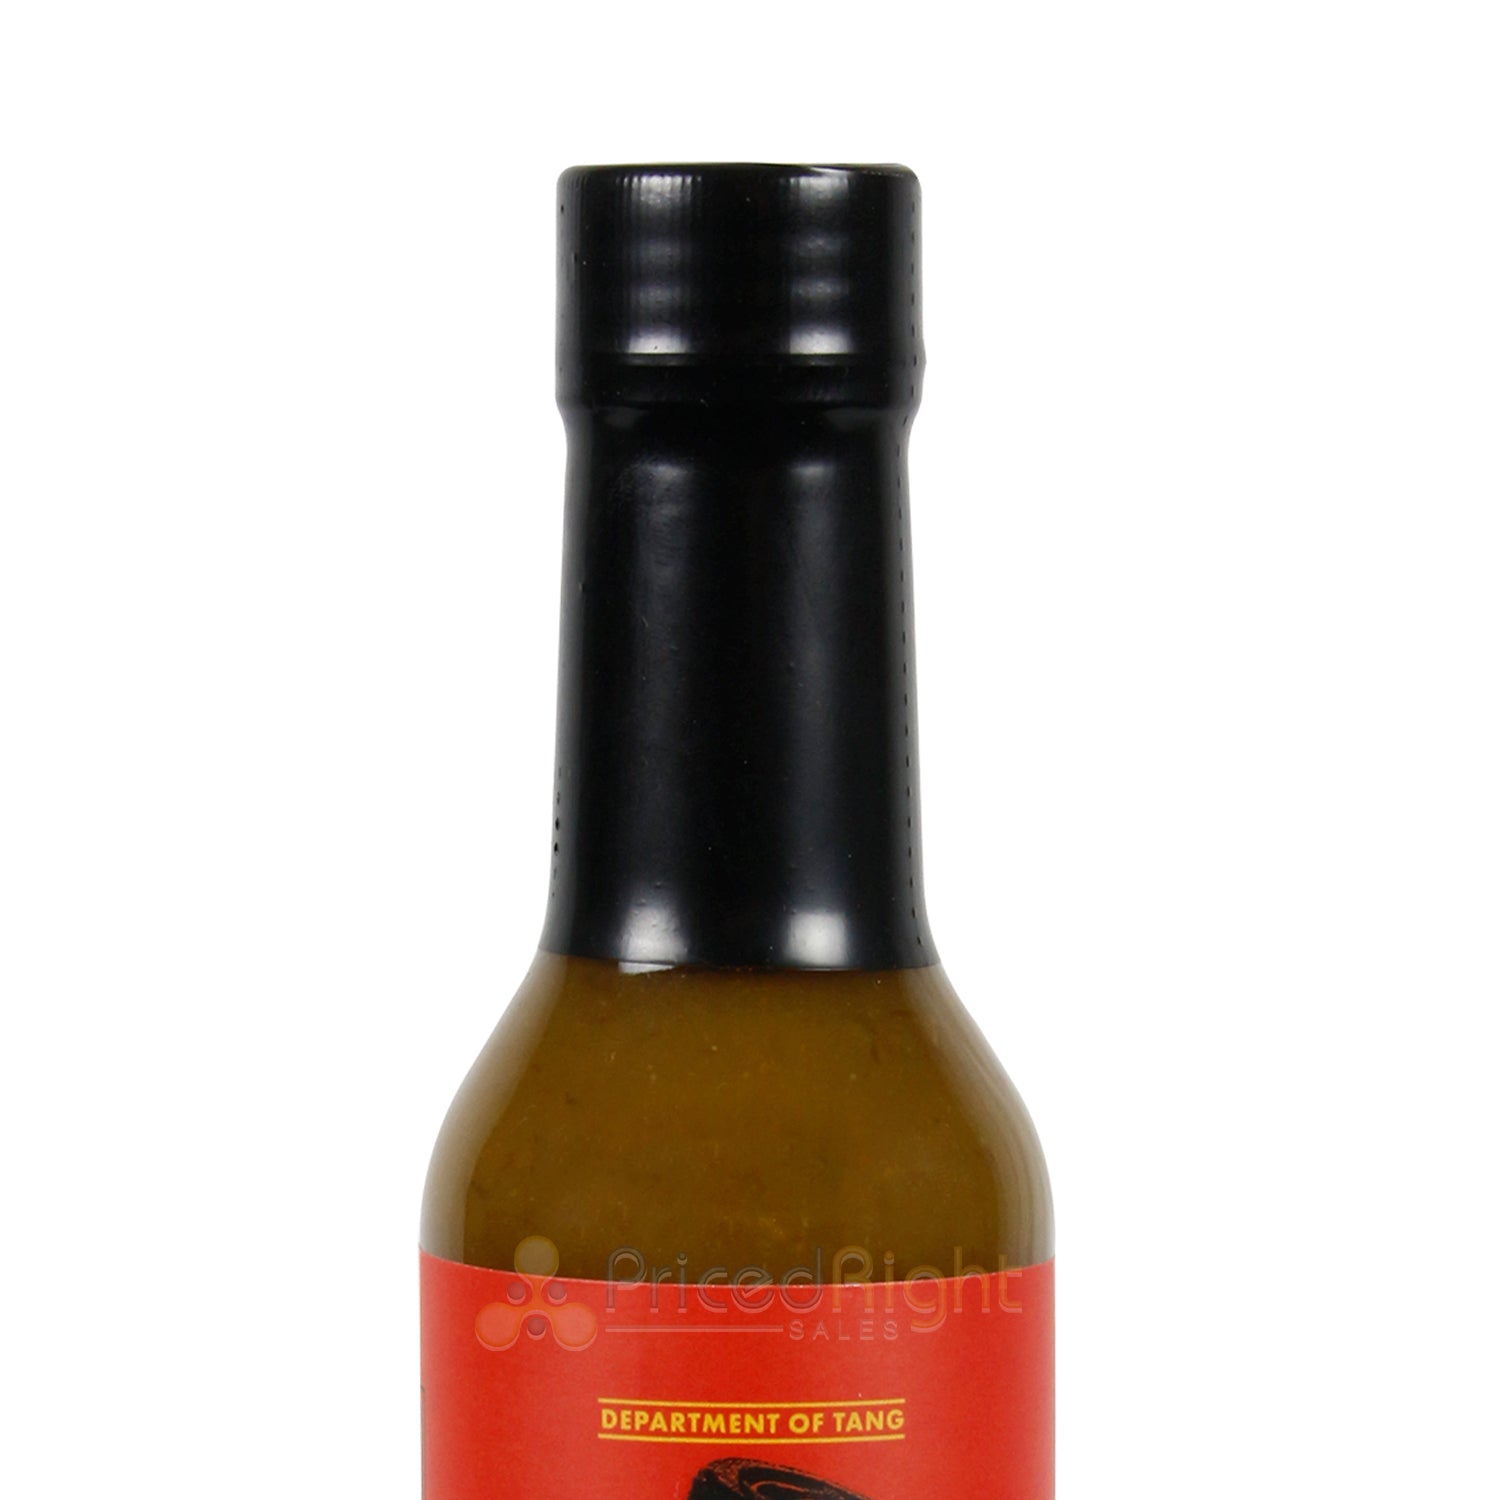 Panchero's Greenade All-Natural Hot Sauce With Jalapeno And Citrus Flavors 5oz